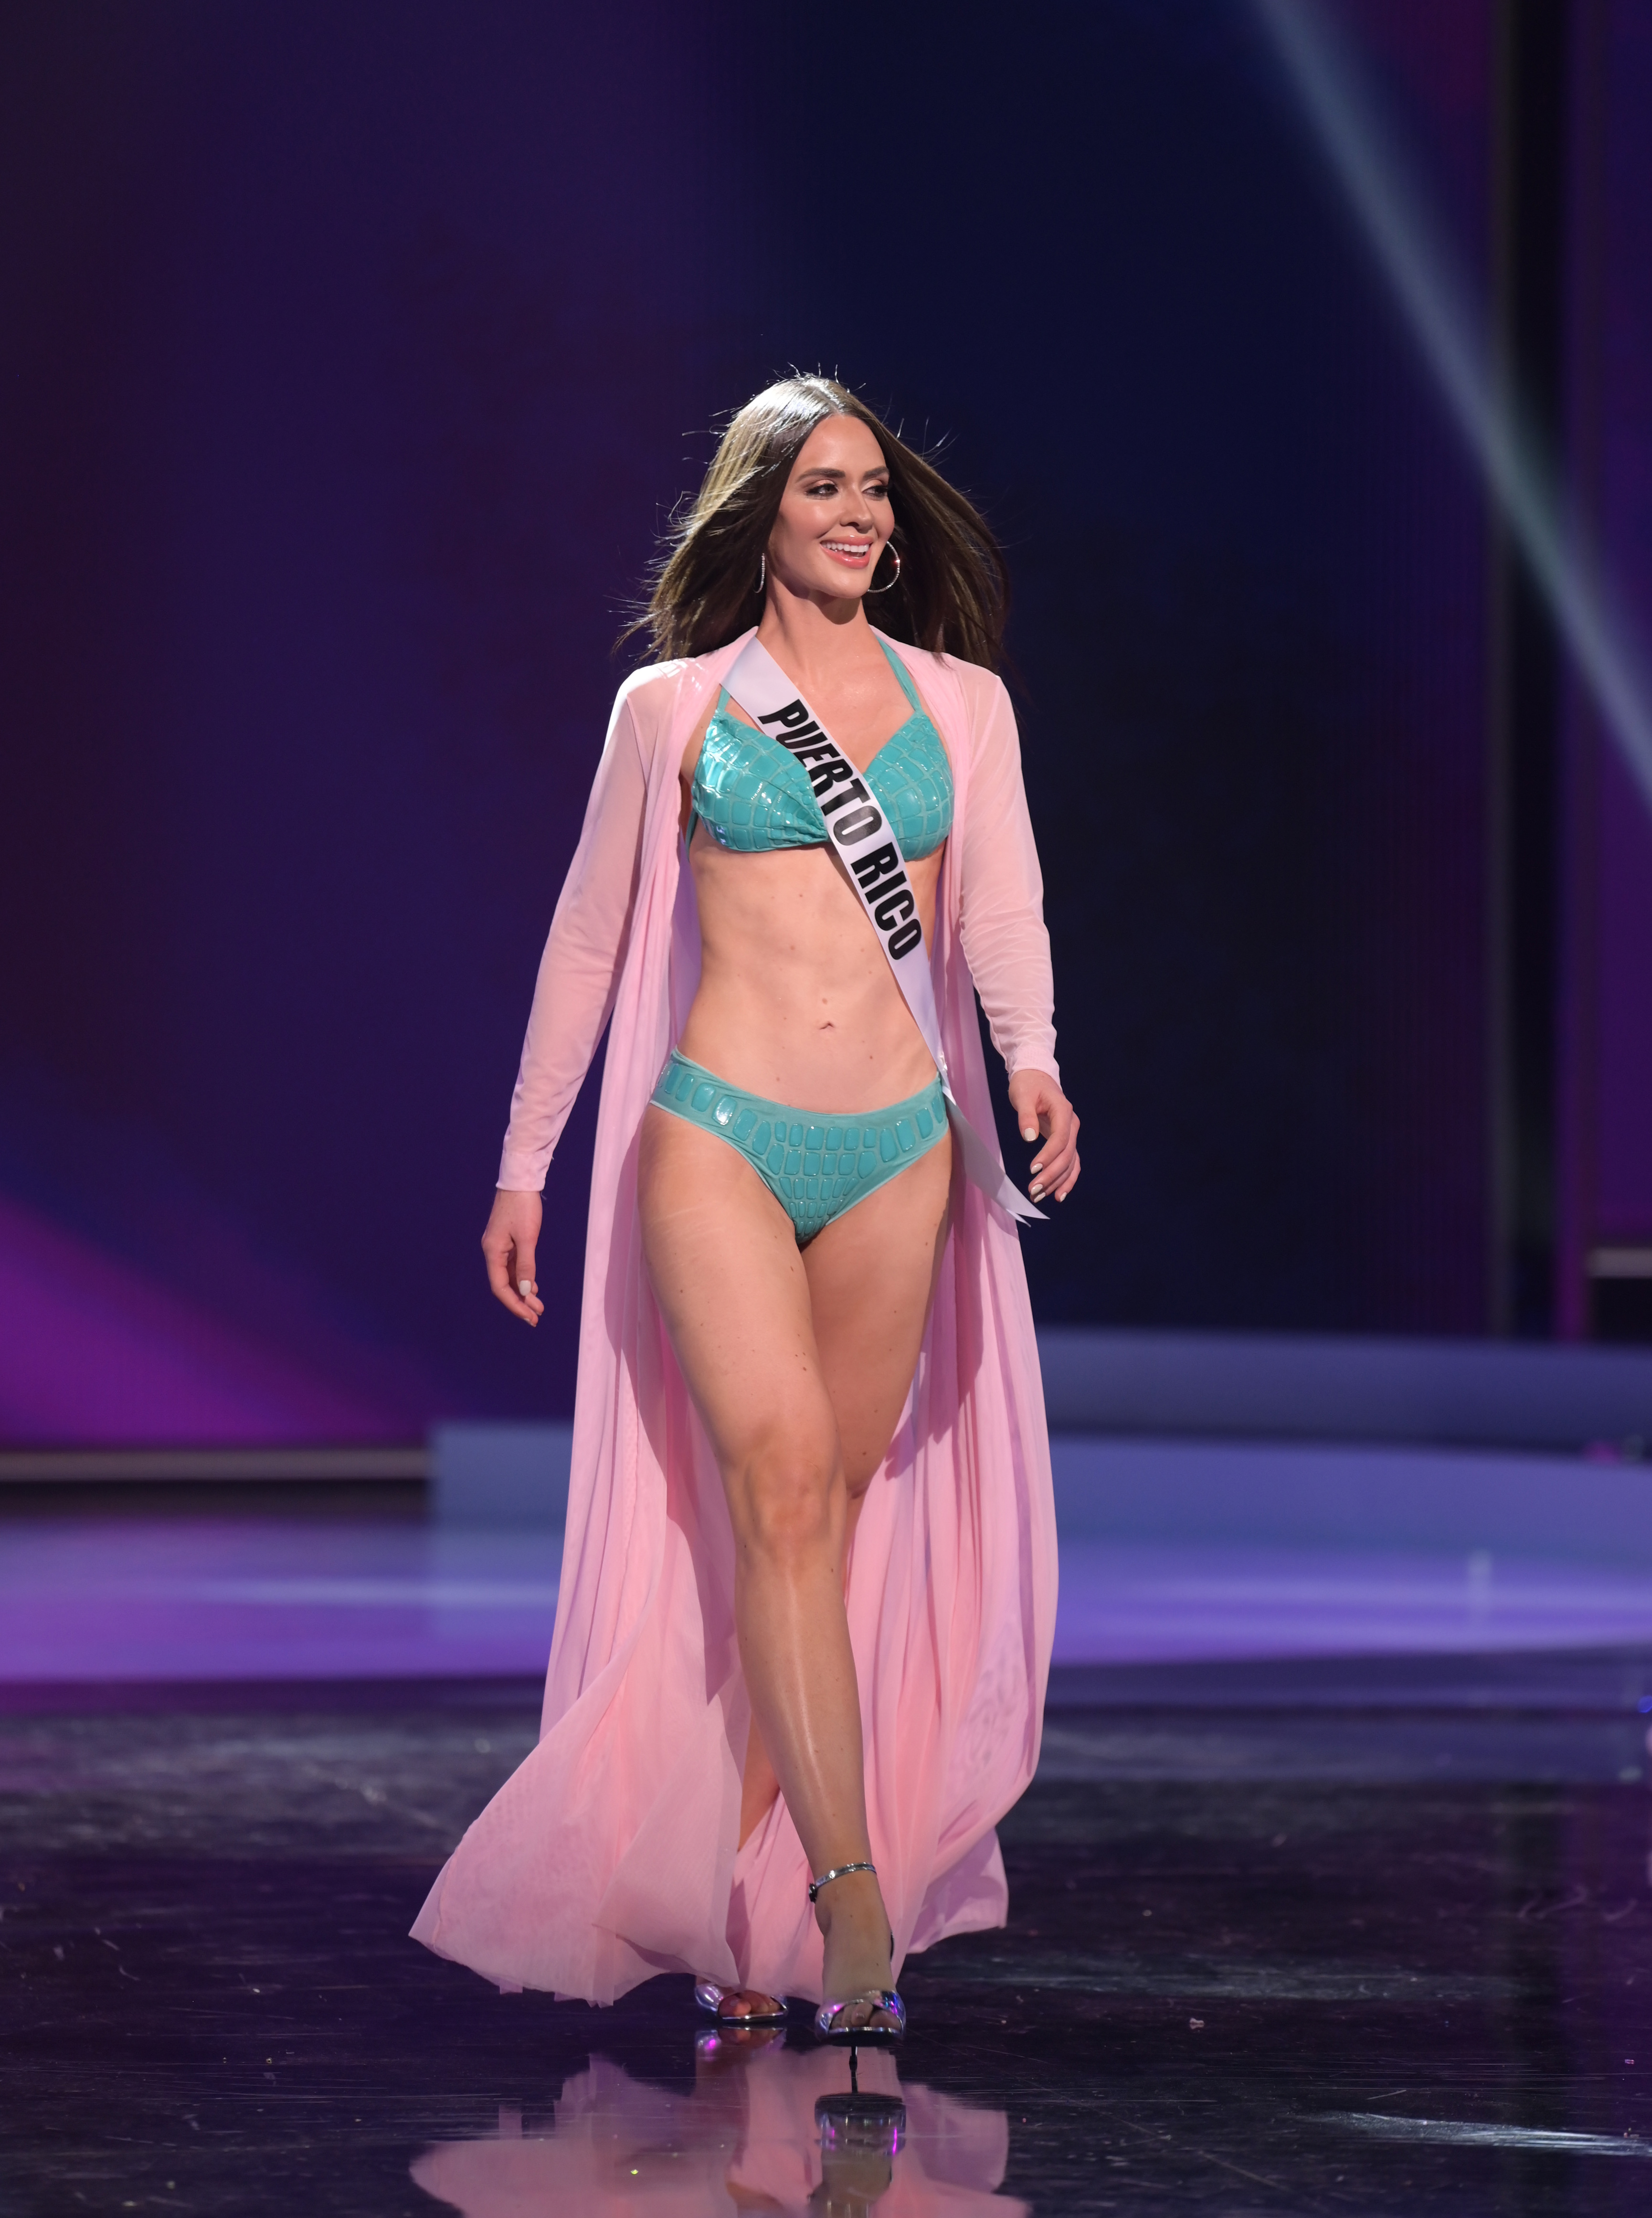 Fotos de Desfile traje de baño Miss Universo 2021 - E! Online Latino  - MX